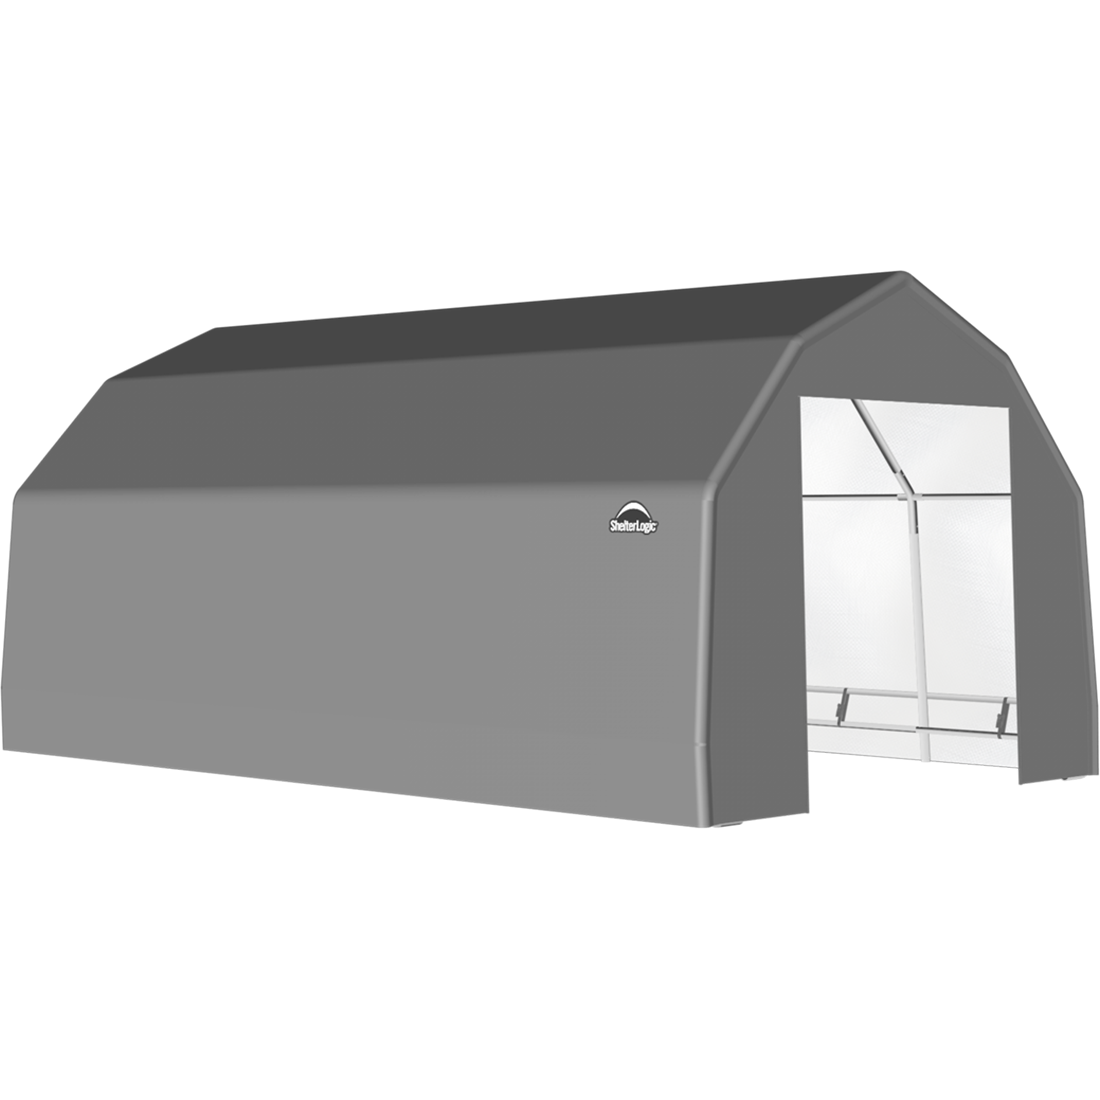 ShelterTech SP Series Barn Shelter, 15 ft. x 24 ft. x 11 ft. Heavy Duty PVC 14.5 oz. Gray